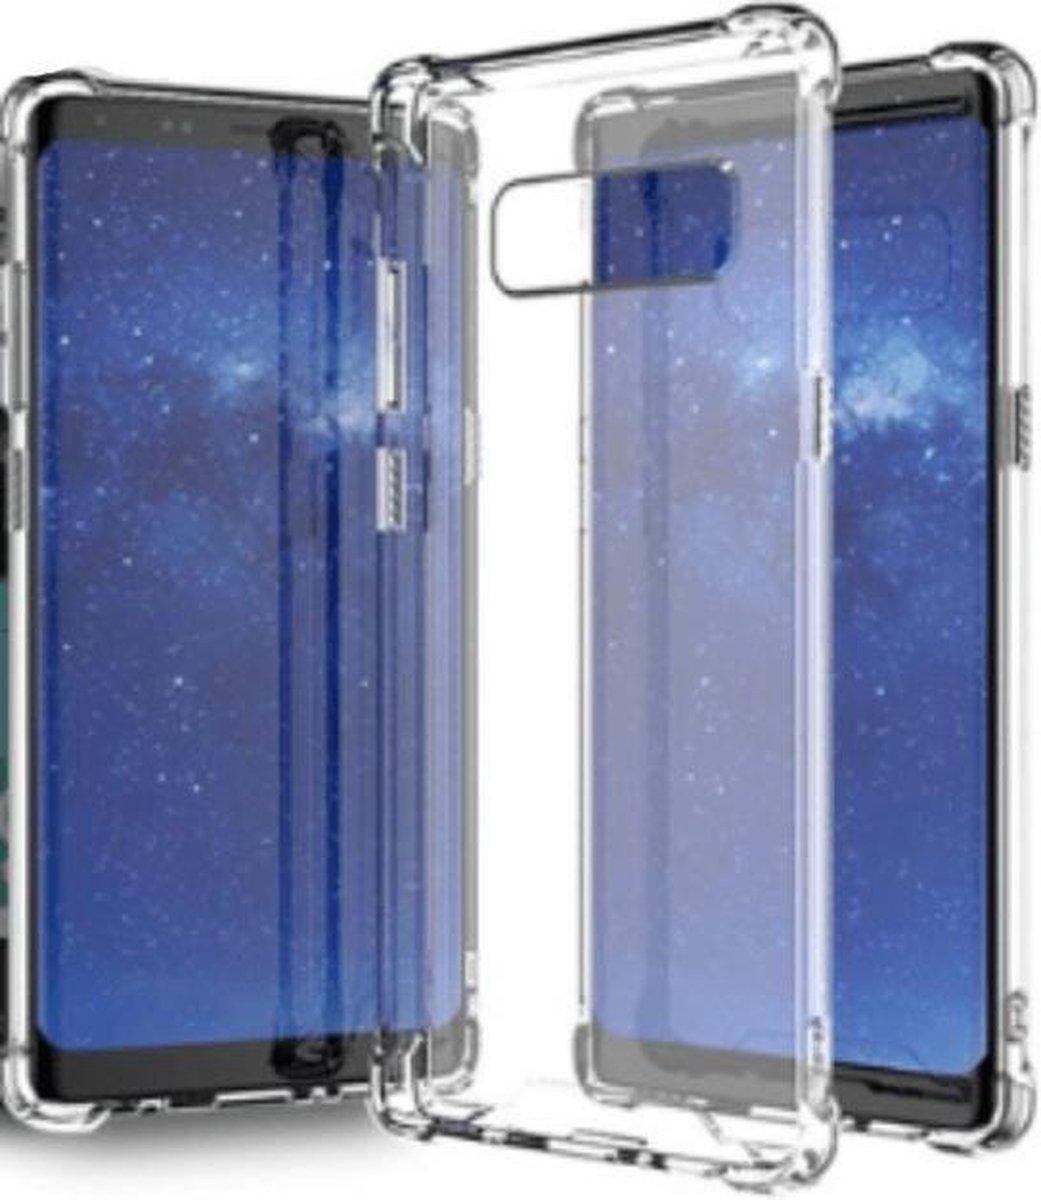 Samsung Galaxy Note 8 transparant siliconen hoes / achterkant met uitgestoken hoeken / anti shock / anti schok van het Merk FB Telecom Groothandel in telefoon accessoires